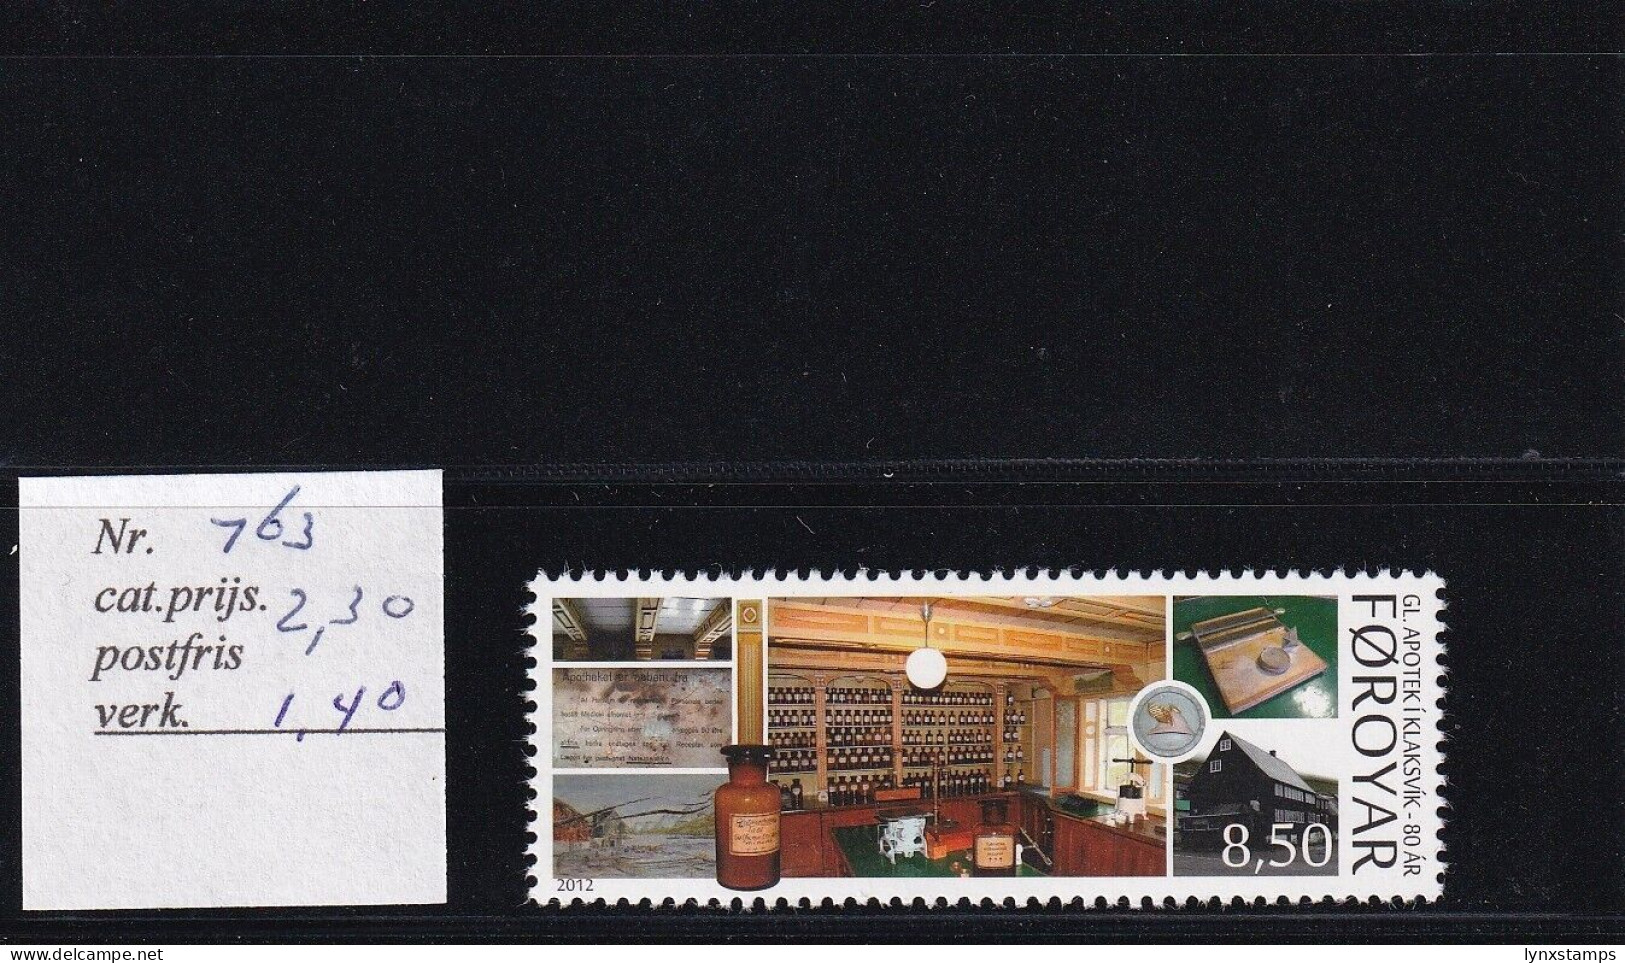 SA03 Faroe Islands 2012 80th Anniv The Old Pharmacy In Klaksvik Mint Stamp - Faroe Islands